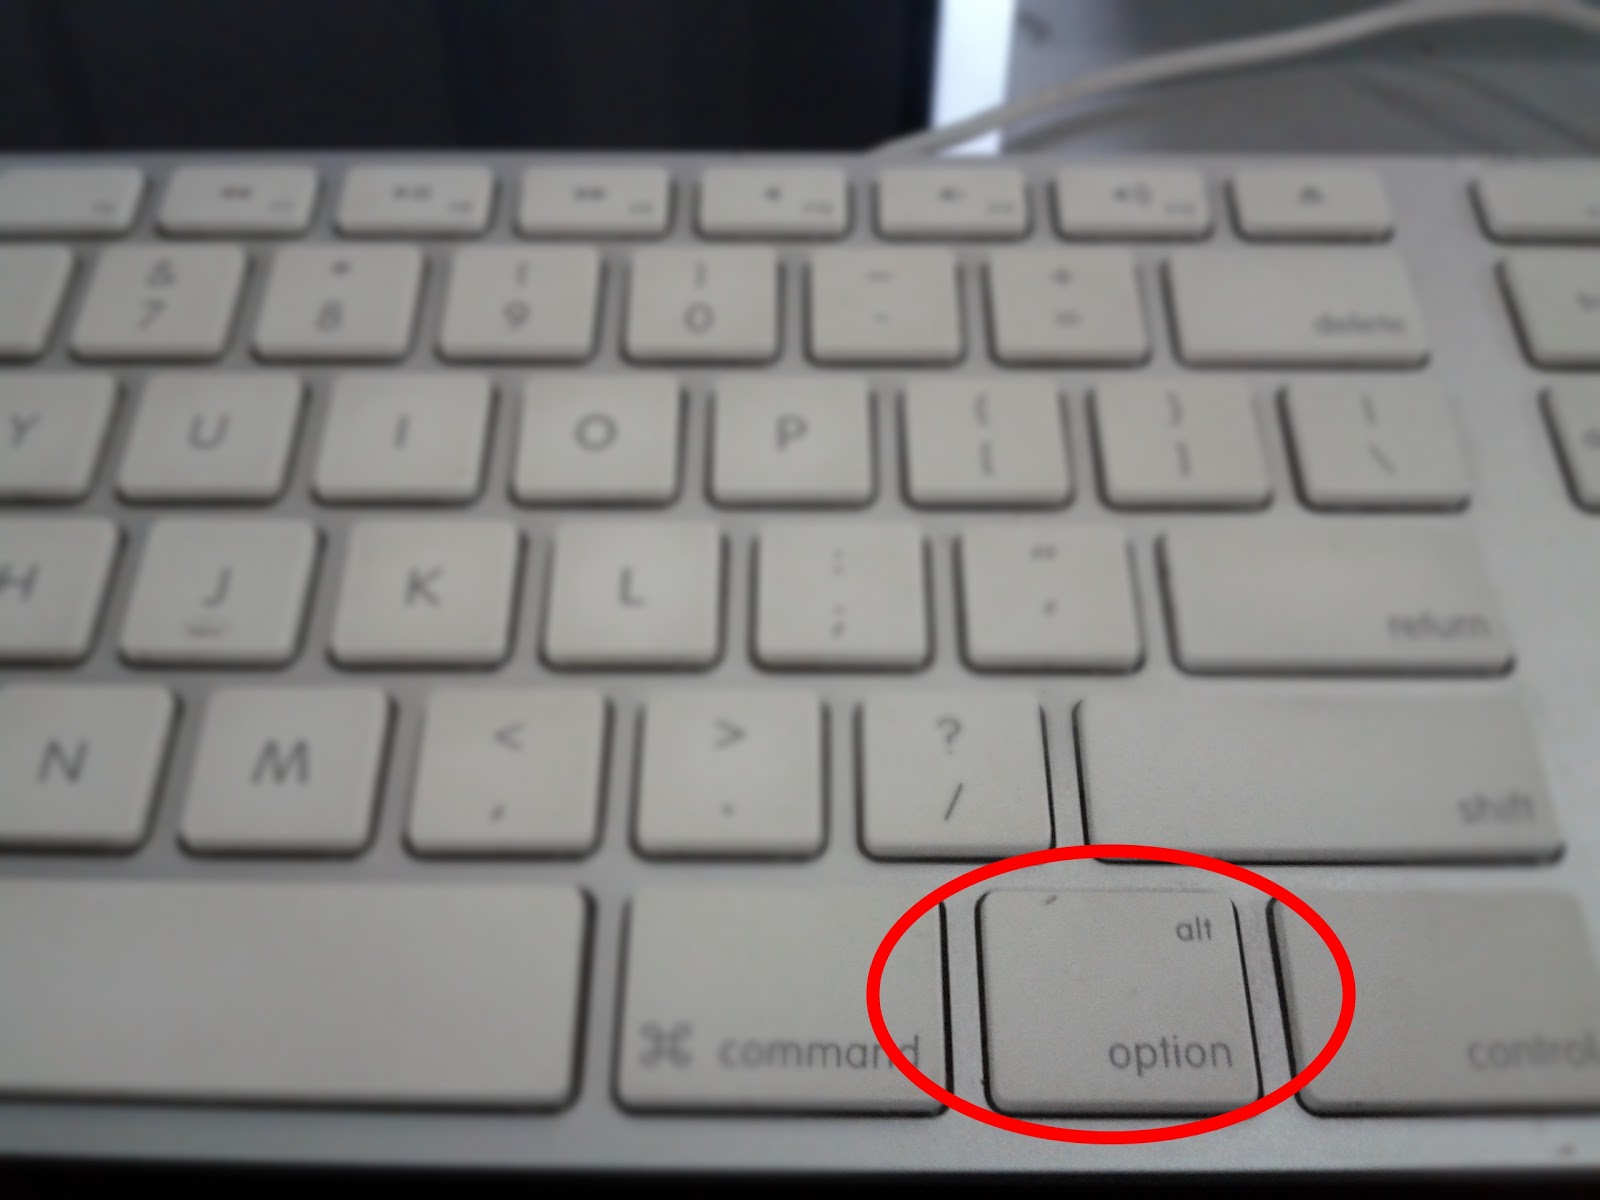 Alt option. Макбук кнопка оптион. Клавиша option на Mac. Кнопка option MACBOOK. Кнопка option на Mac клавиатуре.